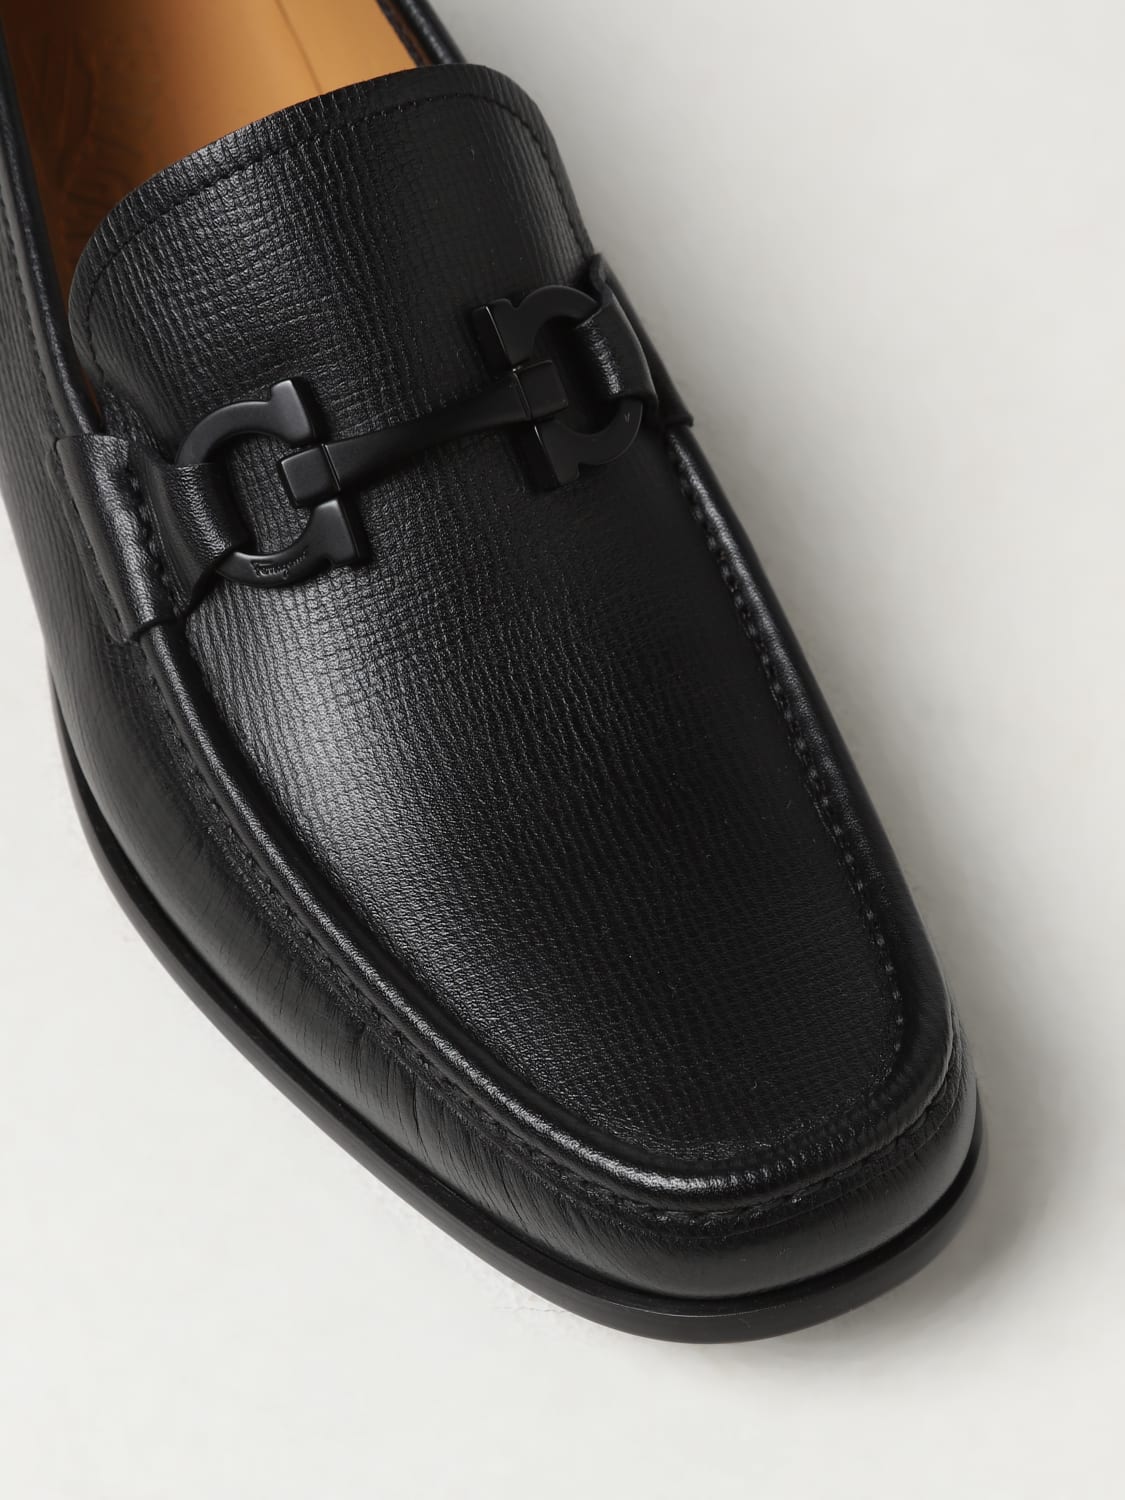 Ferragamo leather loafers with horsebit